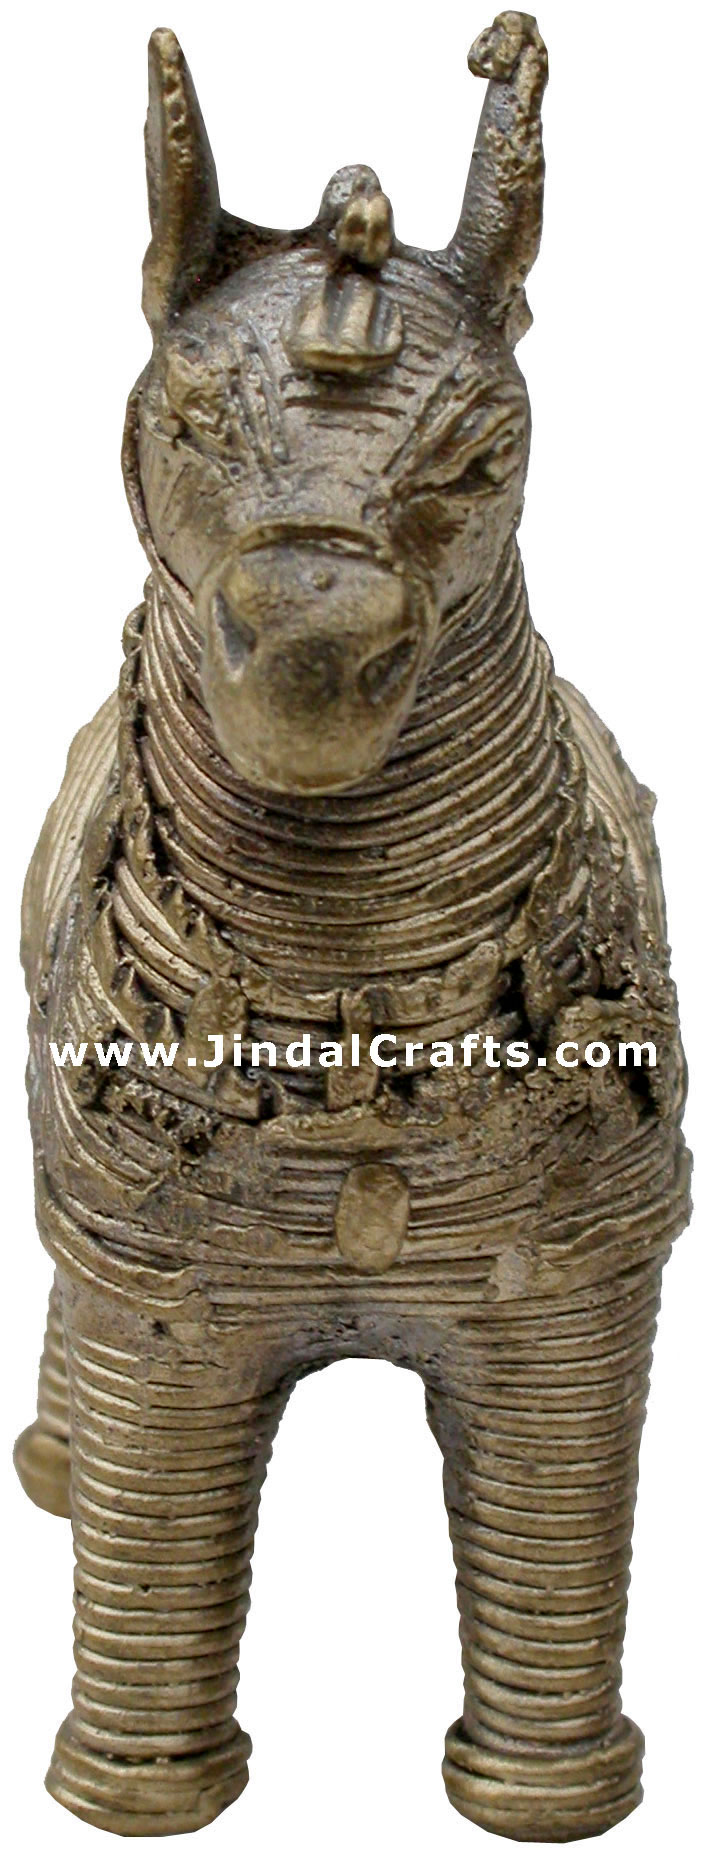 Horse - Tribal Dhokra Metal Animal Artifact from India